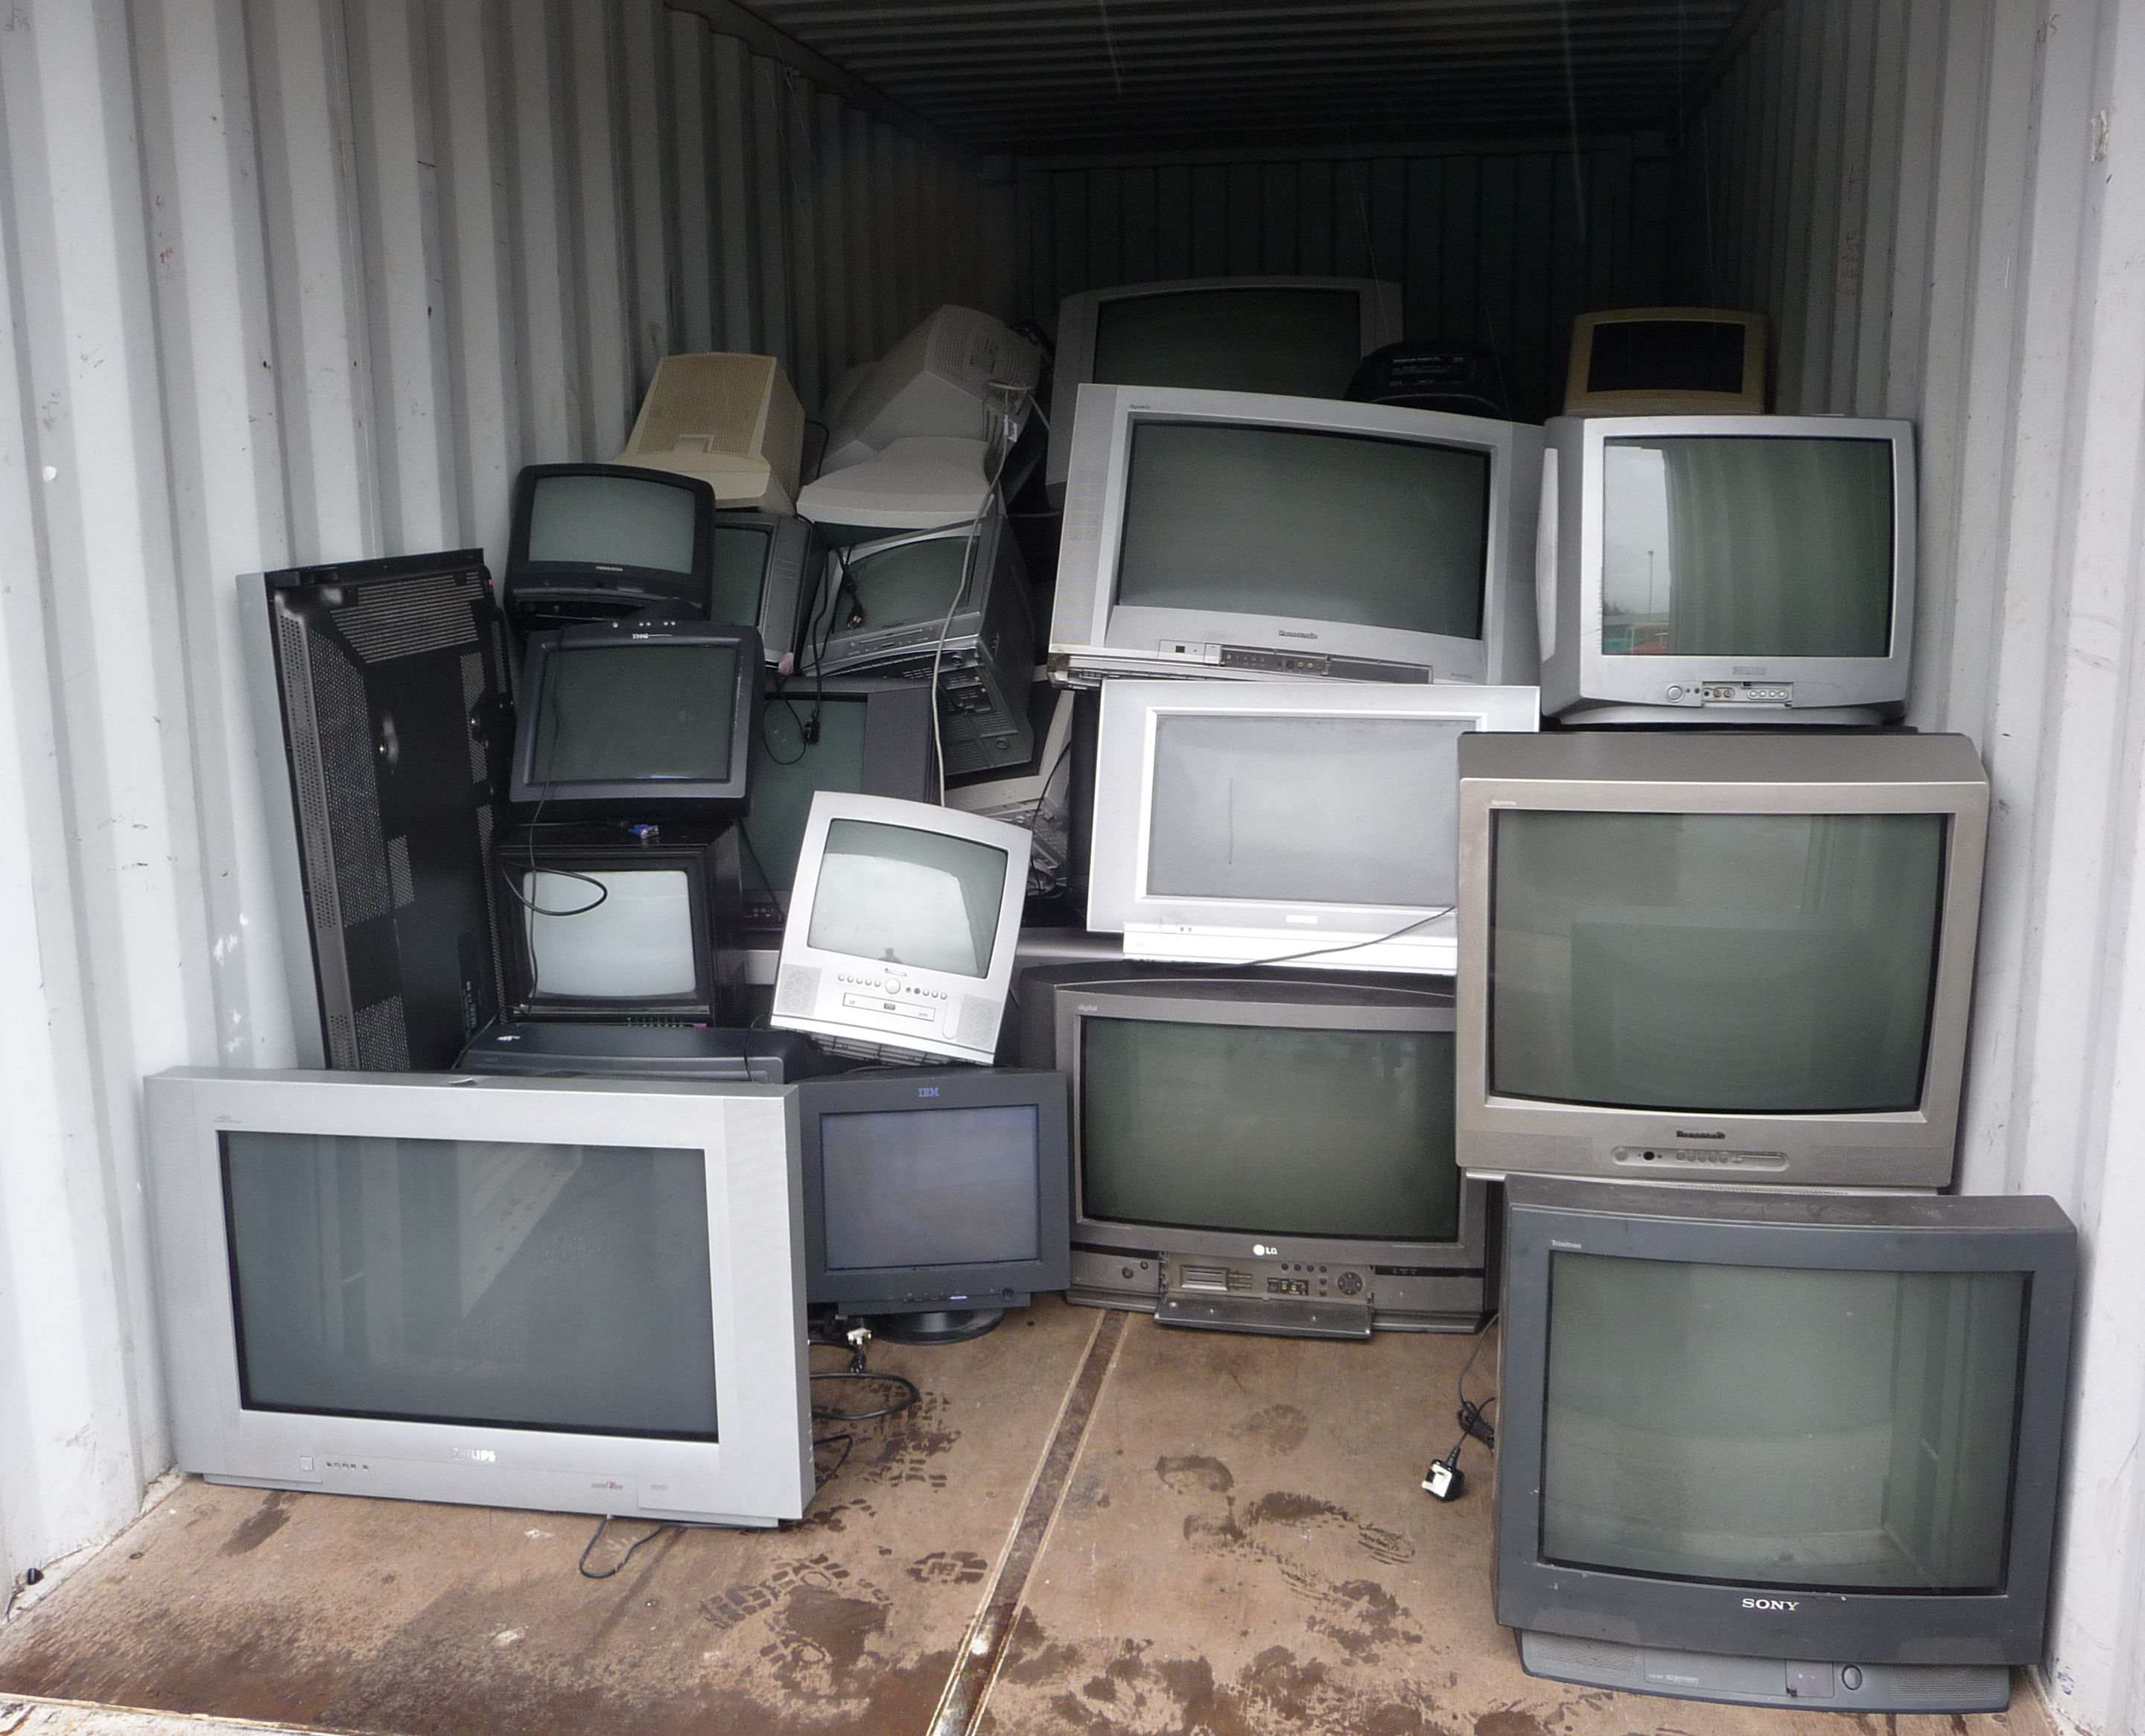 Куплю телевизор балаково. Старый телевизор. Телевизор с кинескопом. Скупают старые телевизоры. Старый кинескопный телевизор.